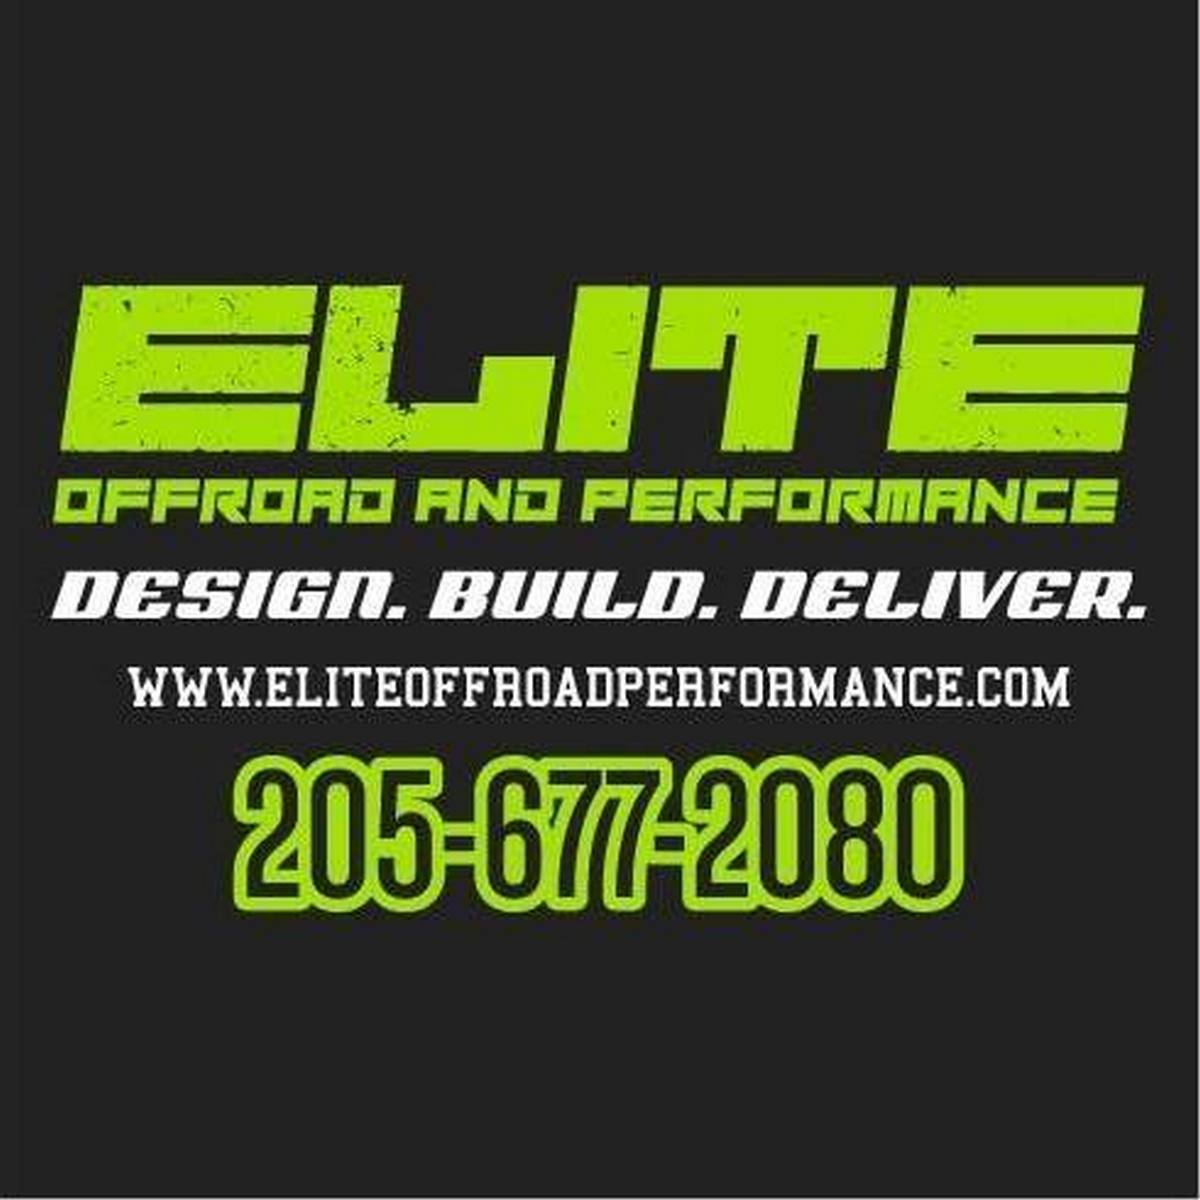 Elite-Offroad-Performance_logo-w-contact-info.jpg